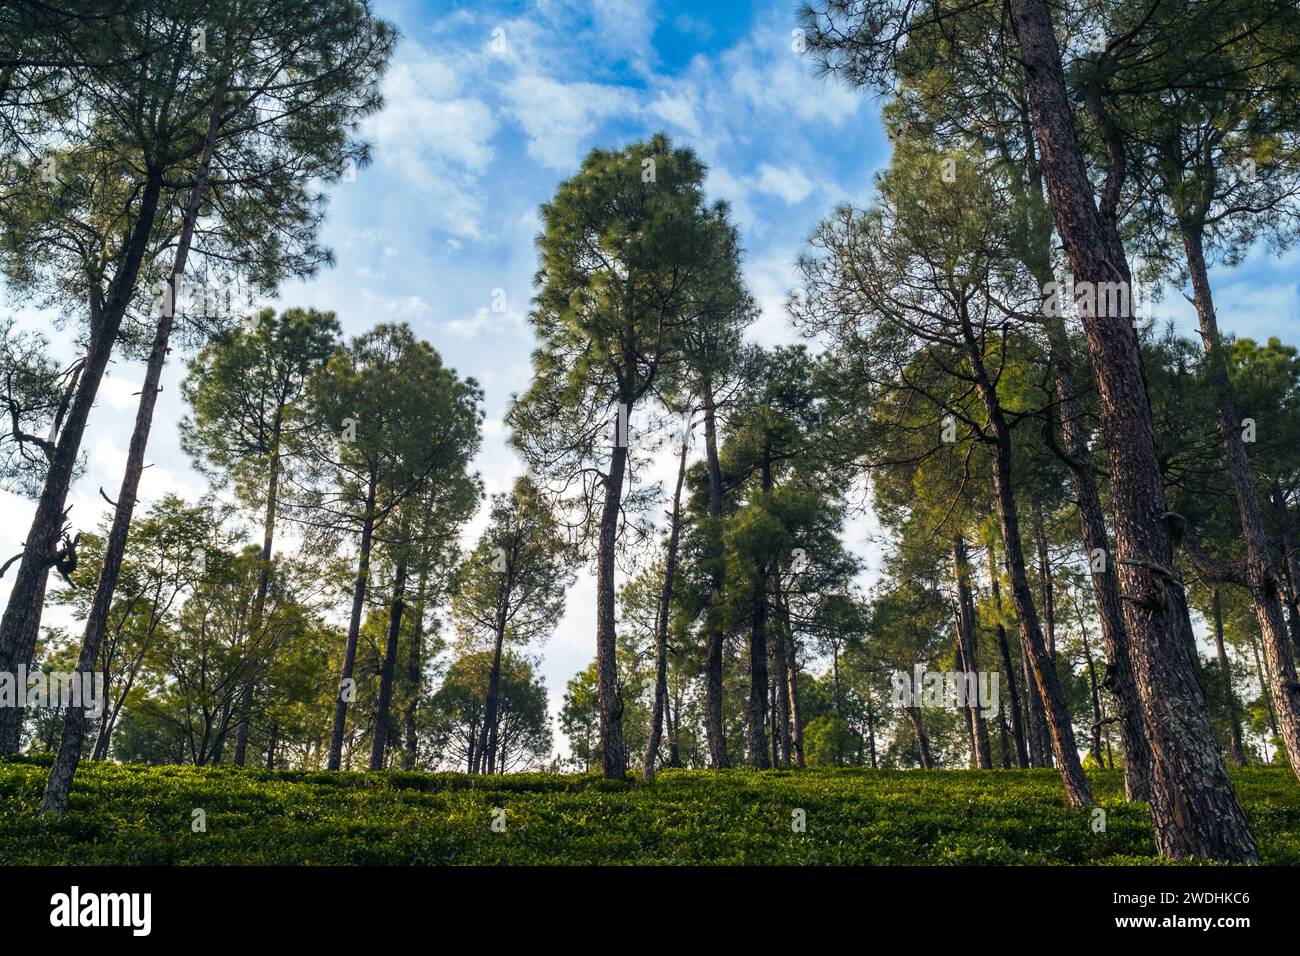 Trees in the forest.  Serine green tea garden landscape in Himalayan region Kausani, Uttarakhand, India. Stock Photo